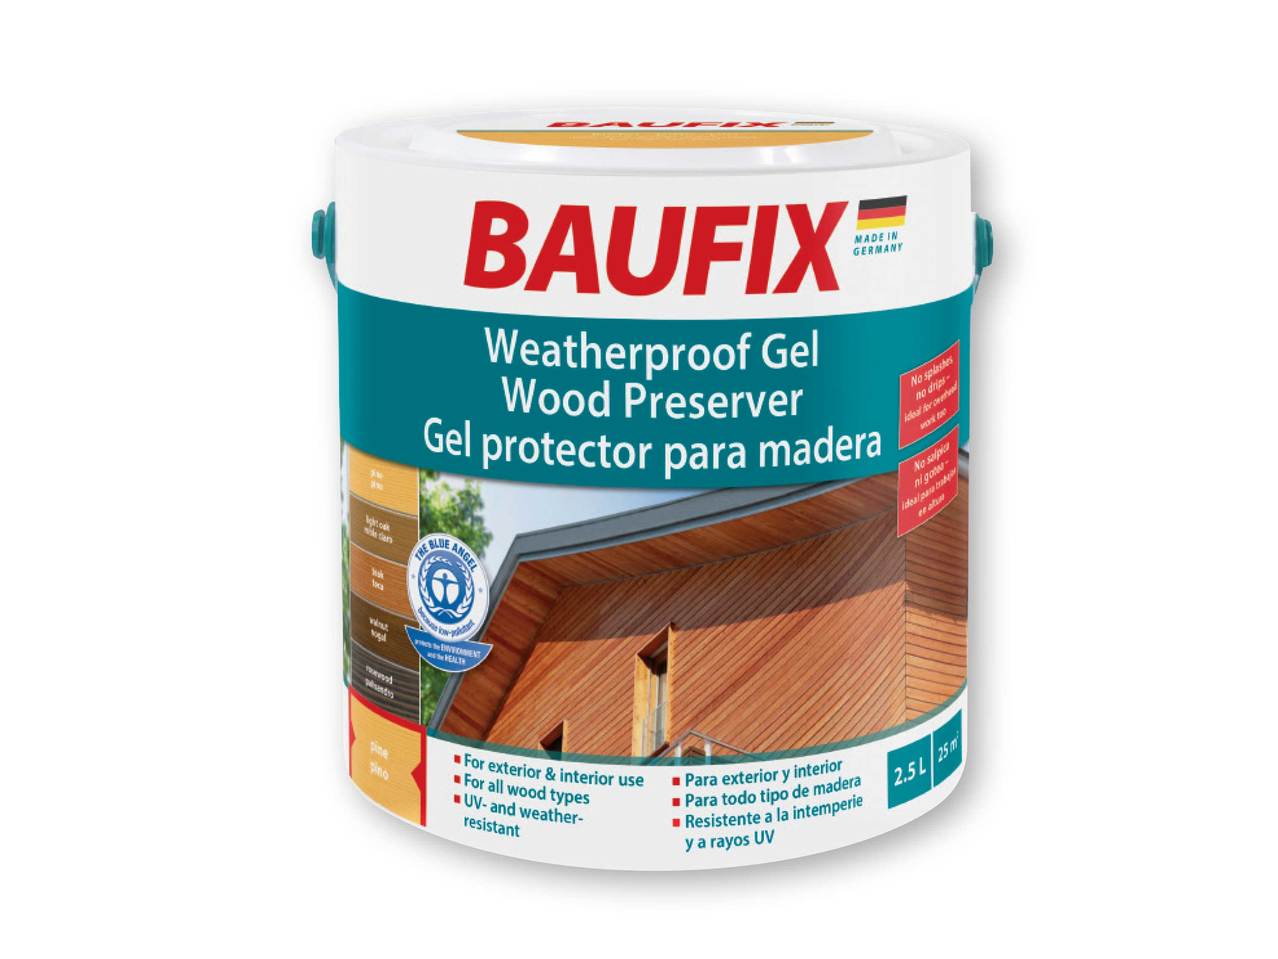 BAUFIX Weather Protection Wood Gel